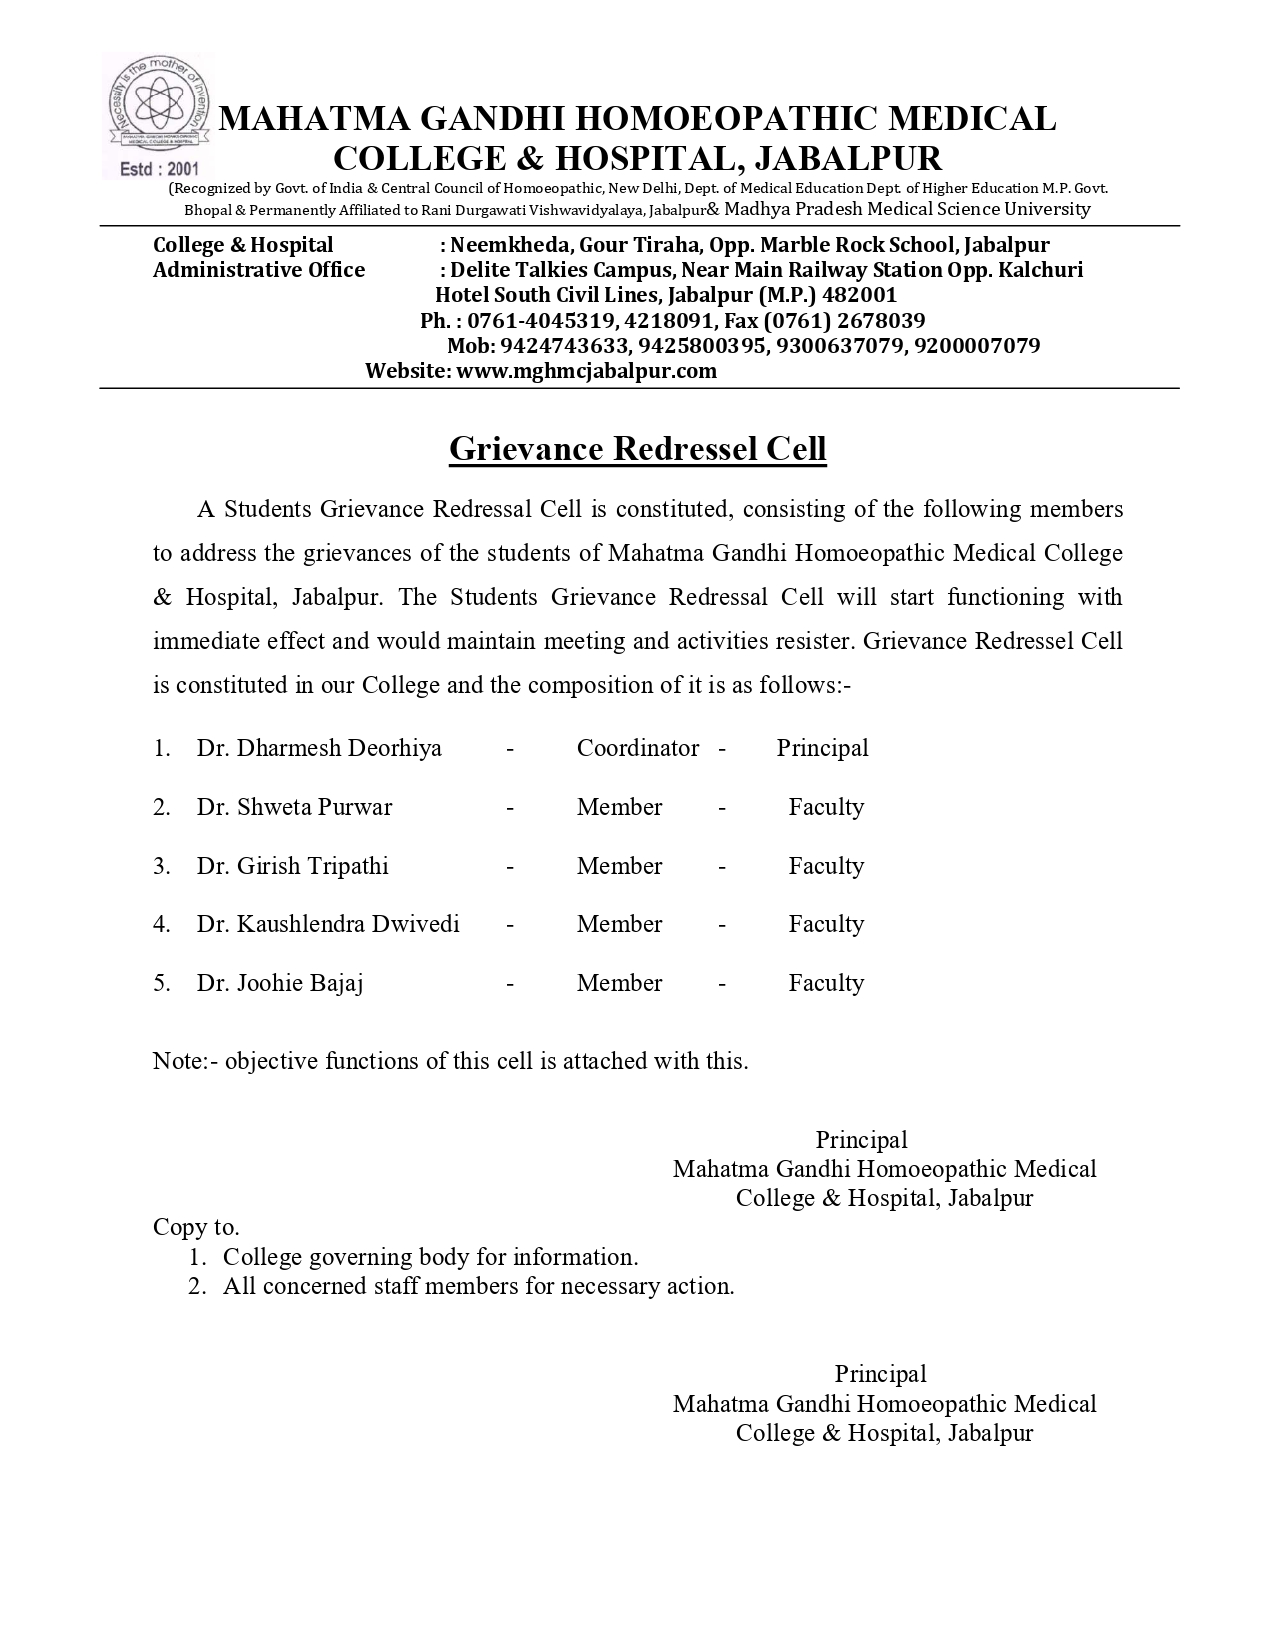 Mahatma Gandhi Homoeopathic Medical College & Hospital Grievance Redresssel Cell